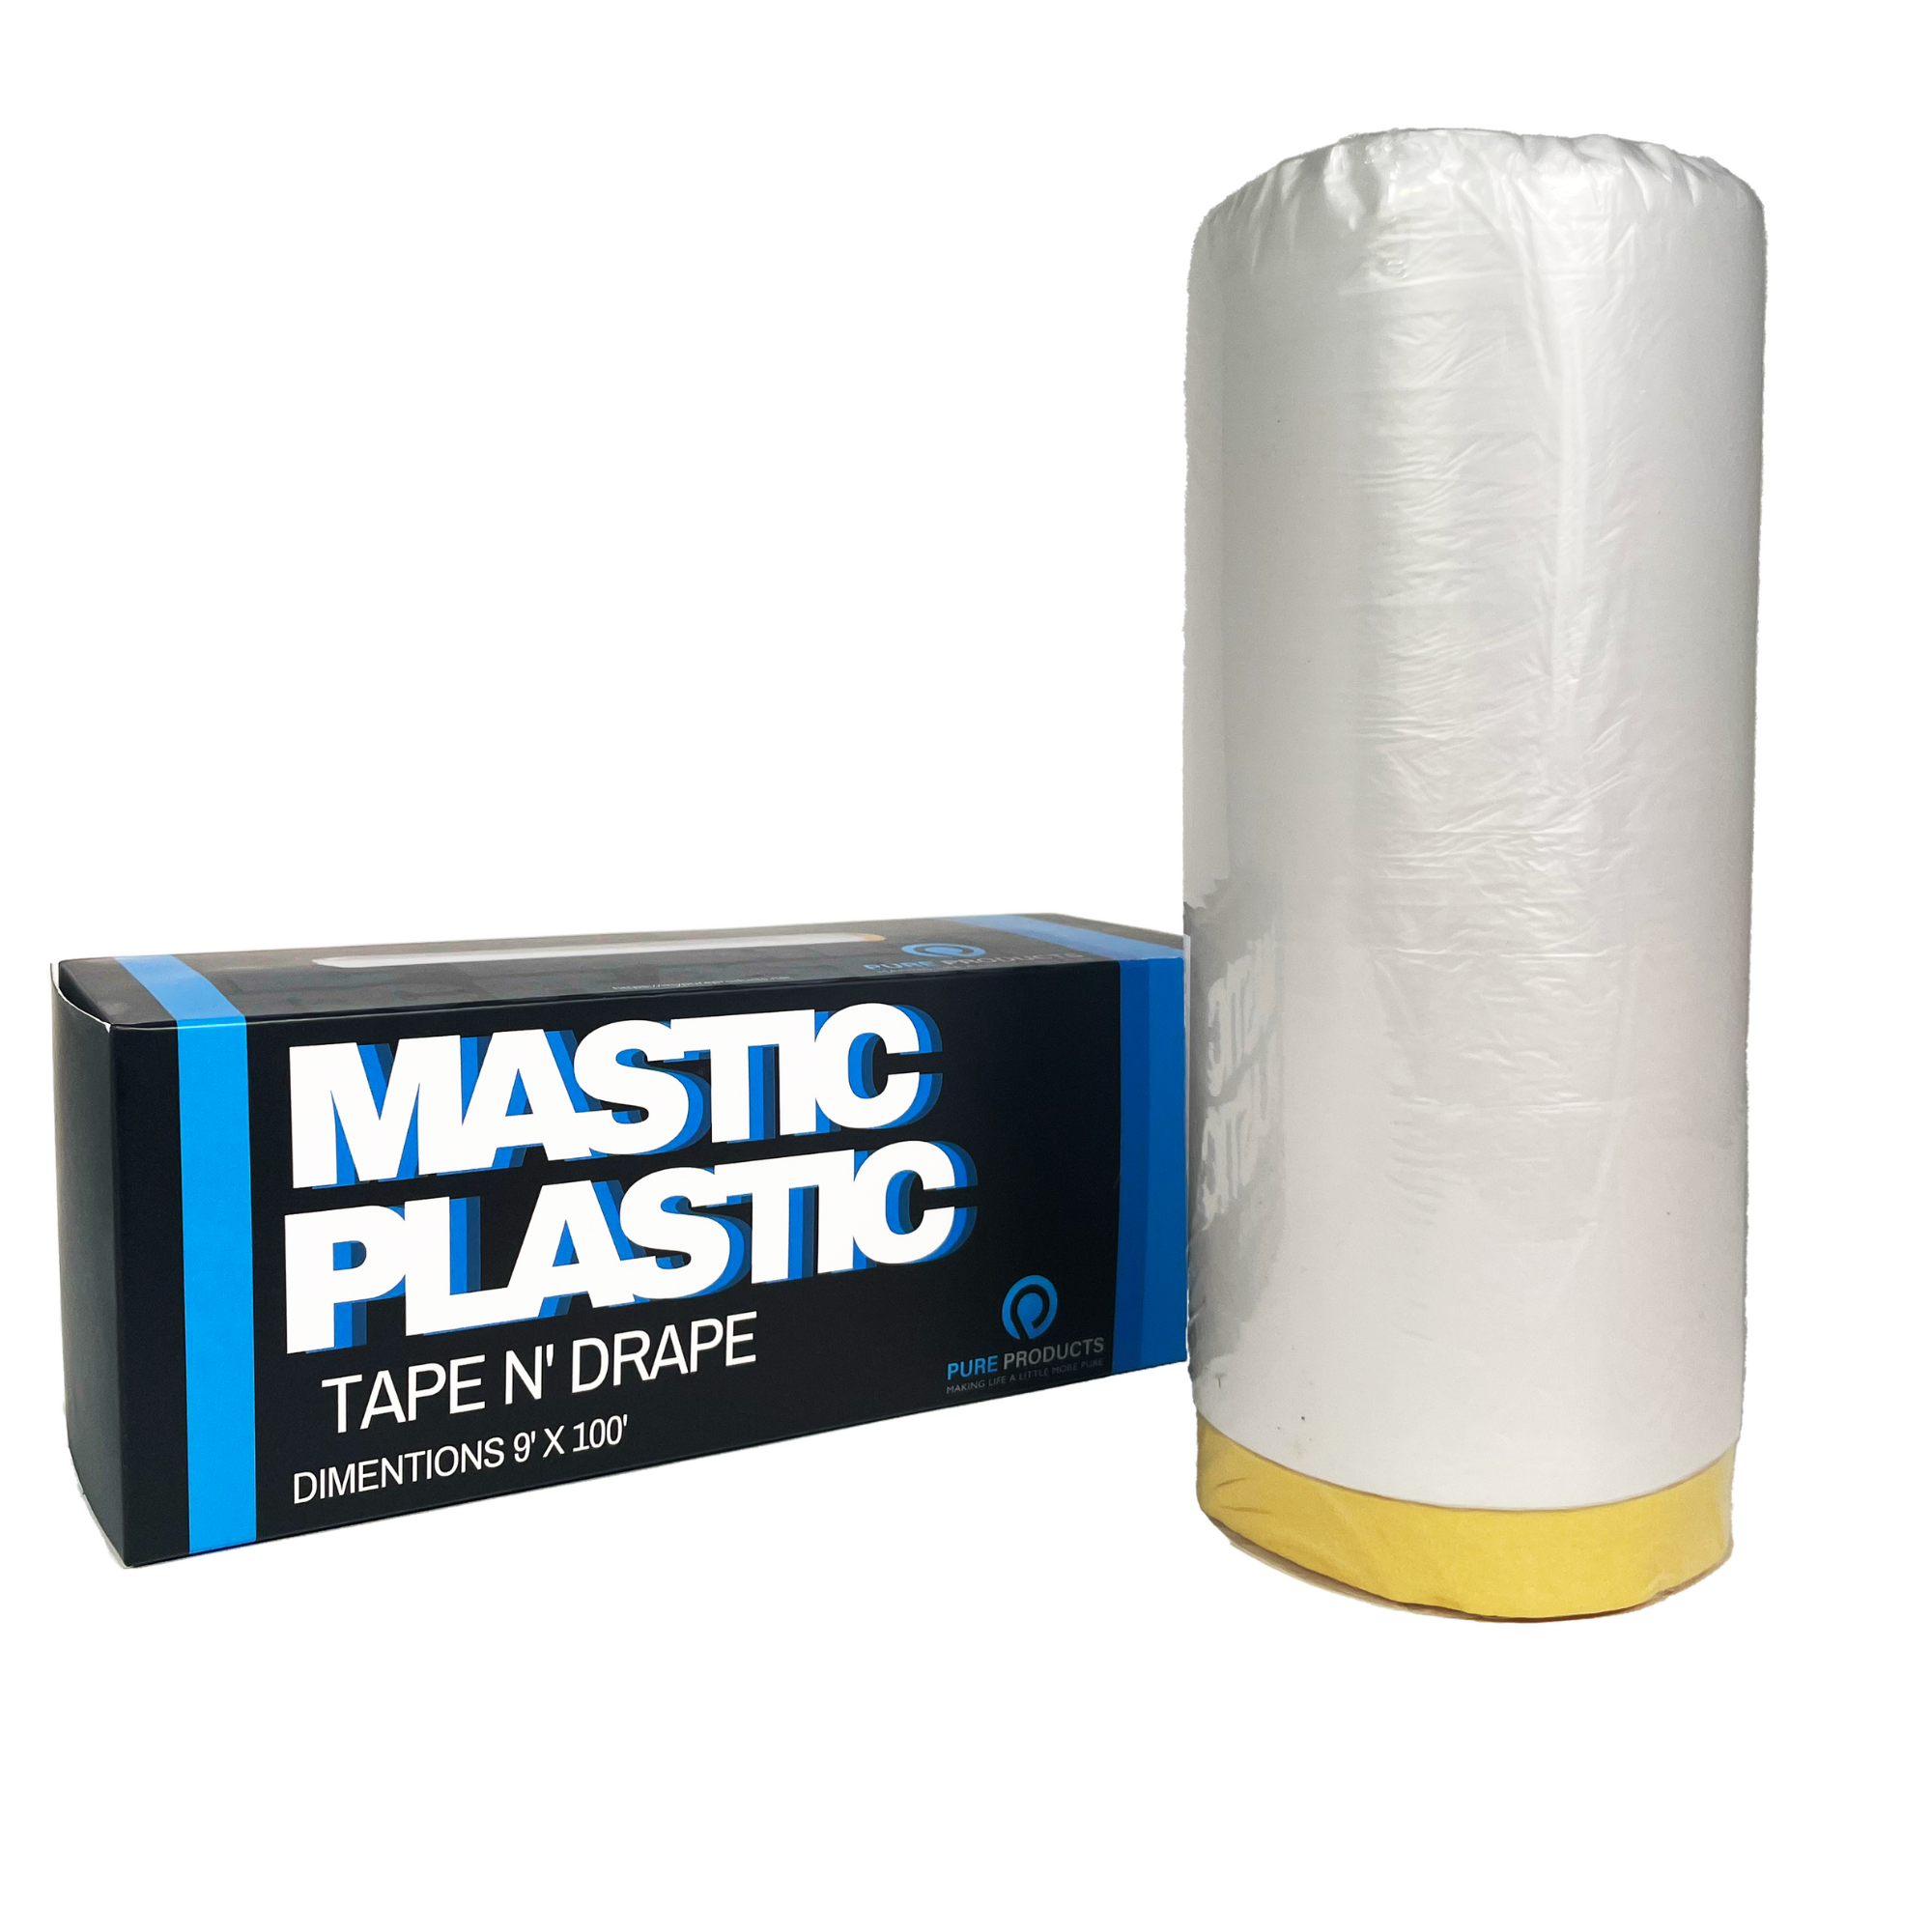 Mastic Plastic | Tape N' Drape